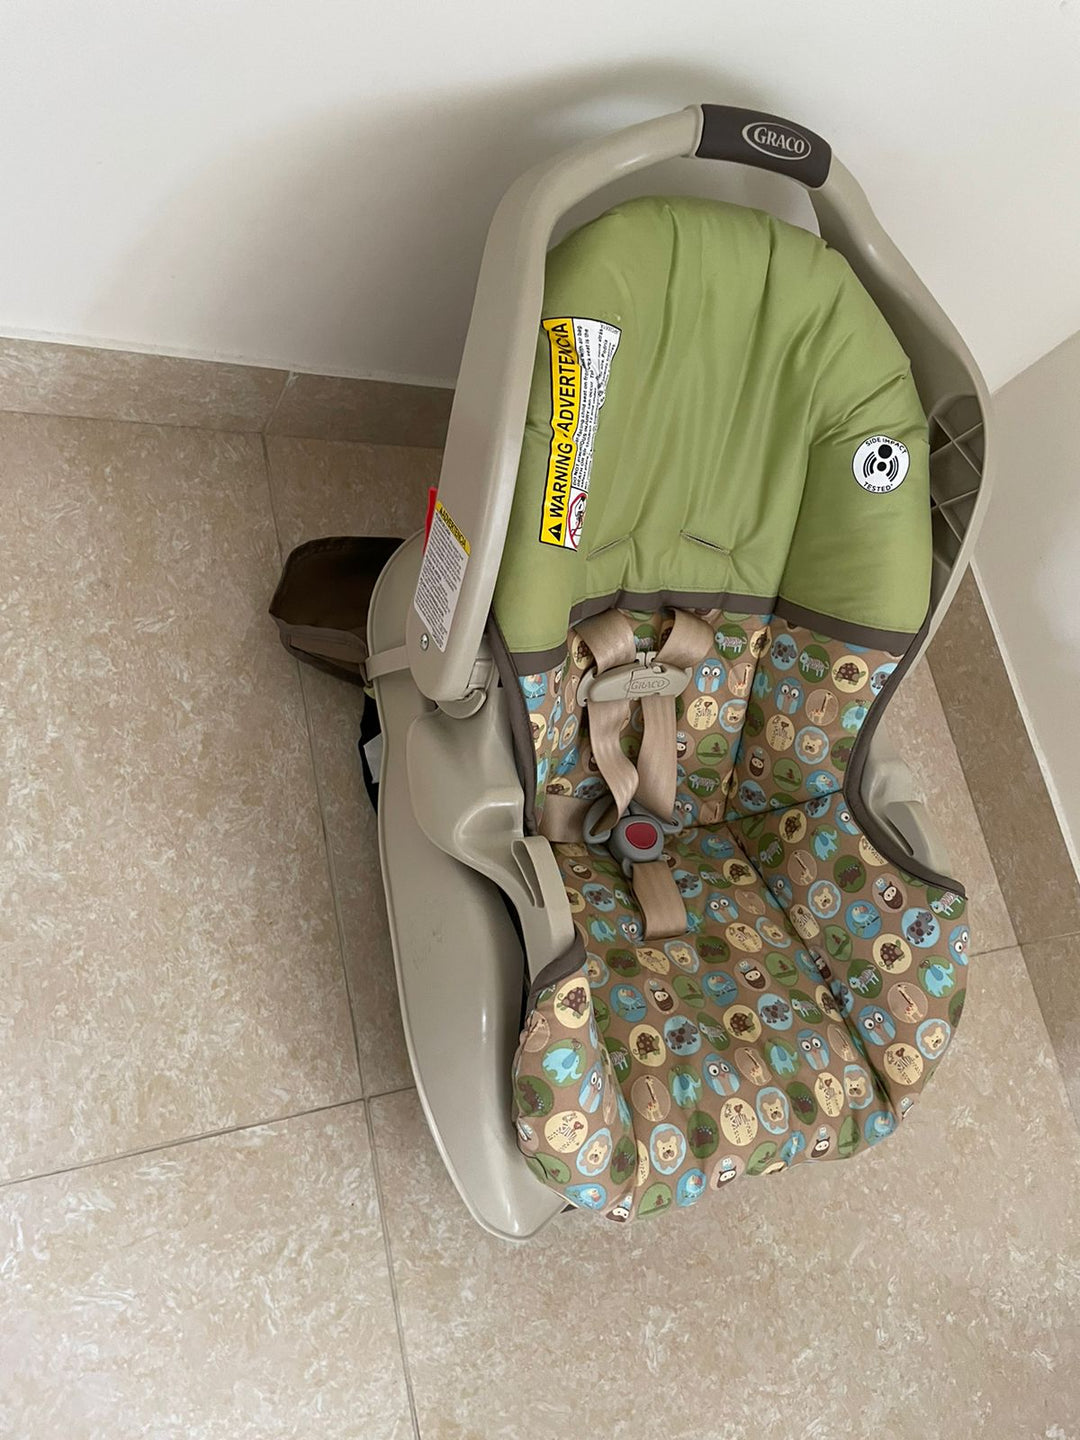 GRACO Snug Ride Infant Car Seat - On The Run Baby Car Seat